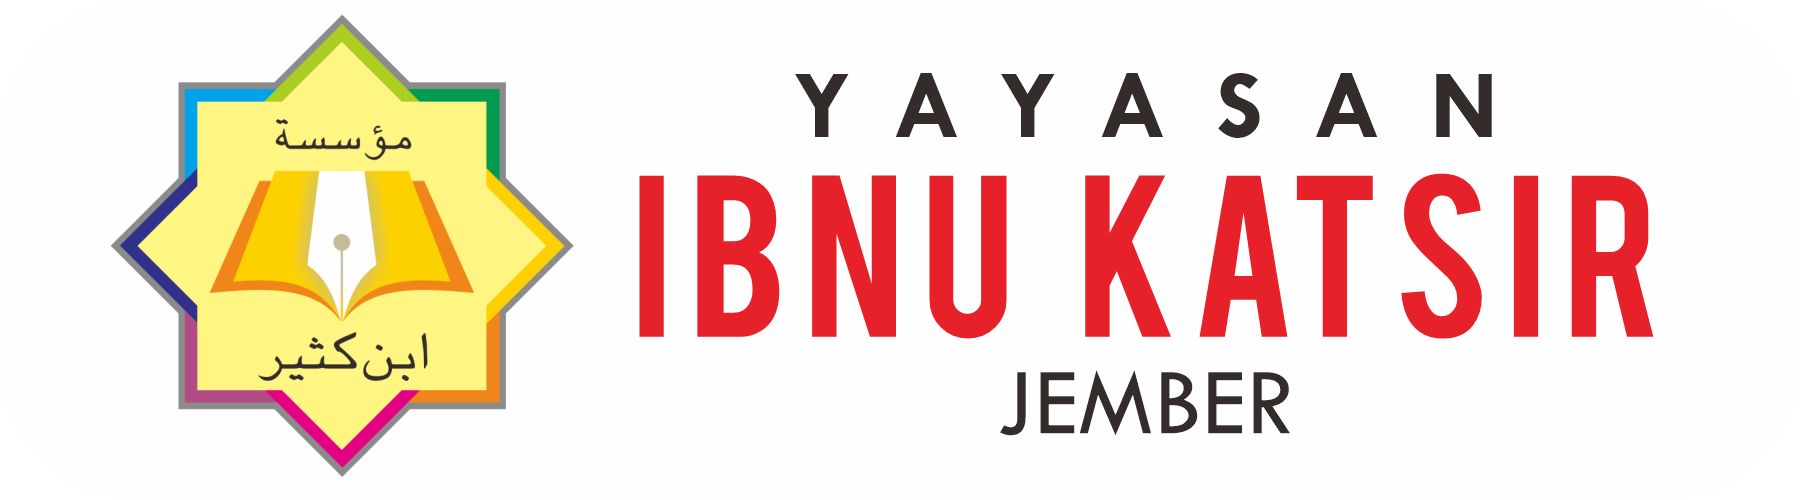 Yayasan Ibnu Katsir Jember